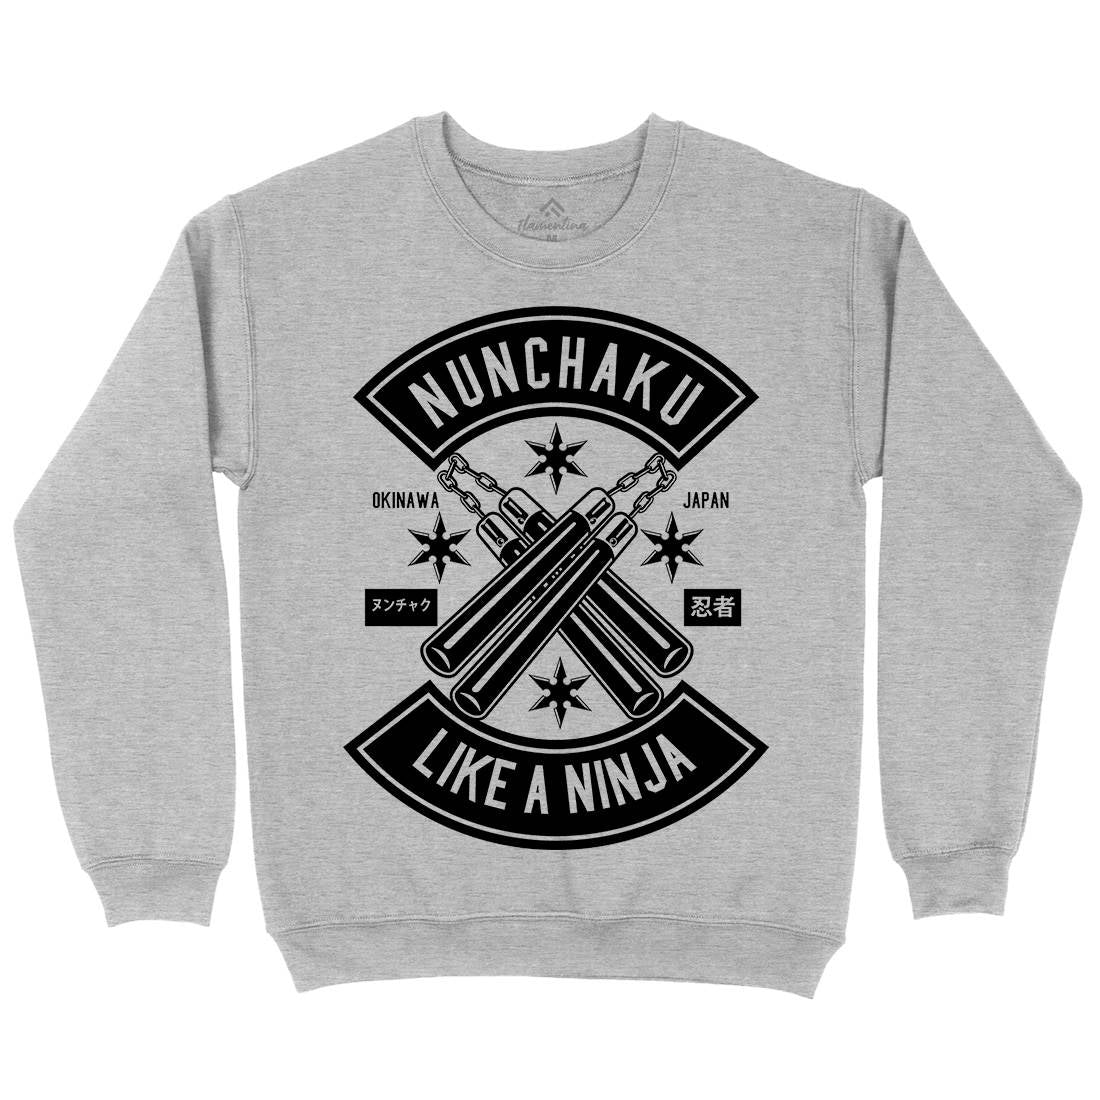 Nunchaku Kids Crew Neck Sweatshirt Sport B589